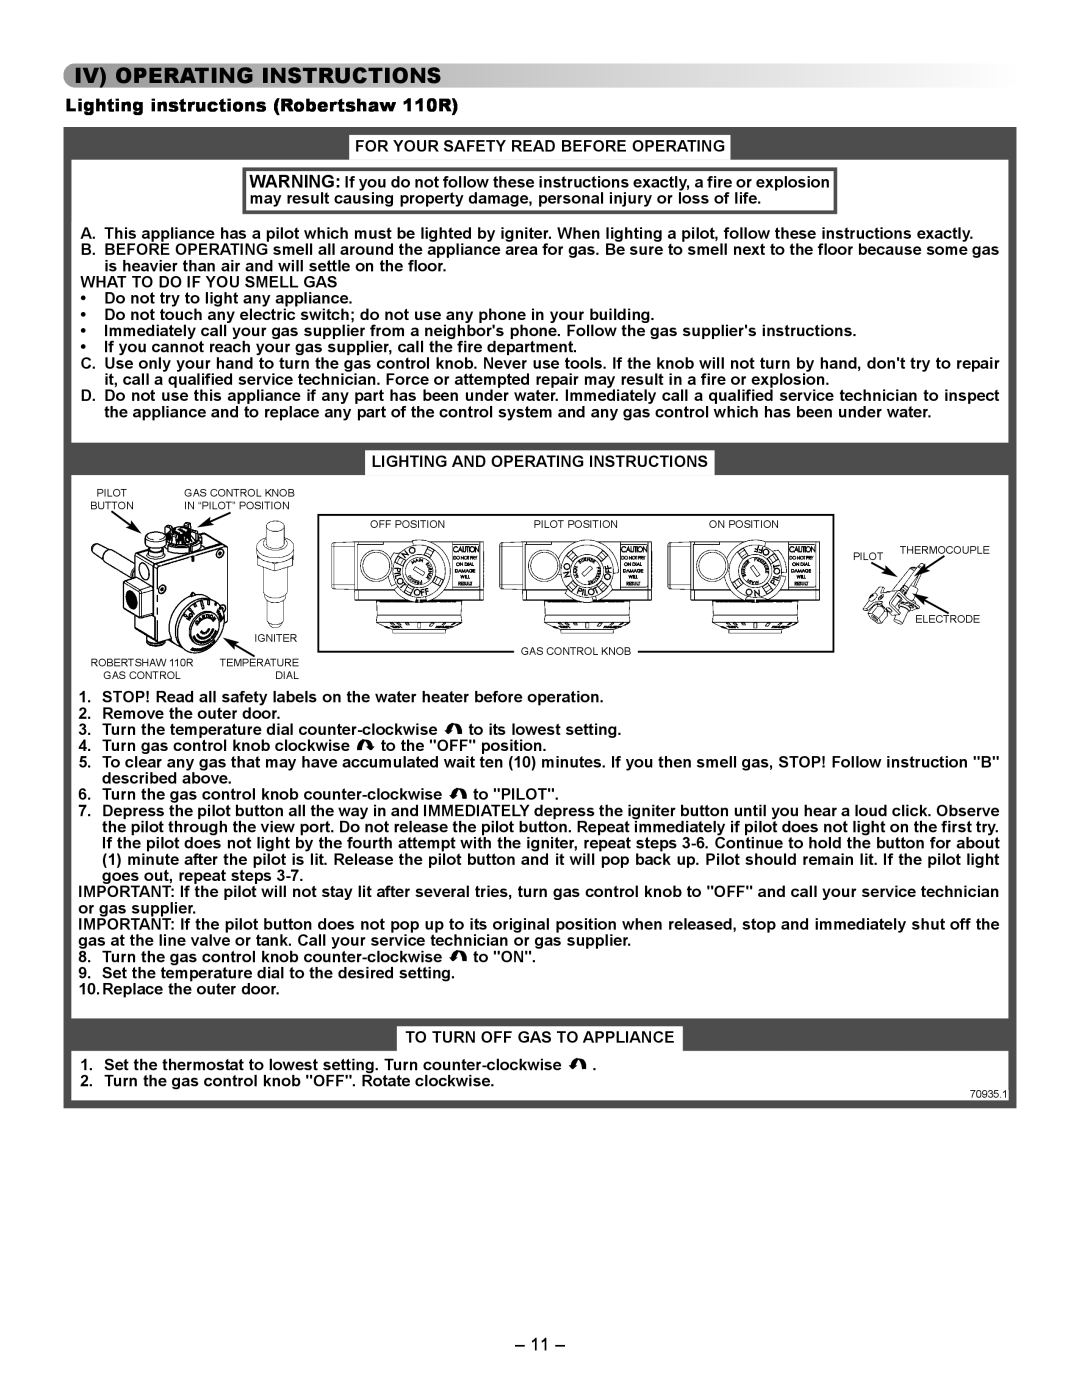 GSW 61009 REV. C (09-03) manual Iv Operating Instructions, Lighting instructions Robertshaw 110R 